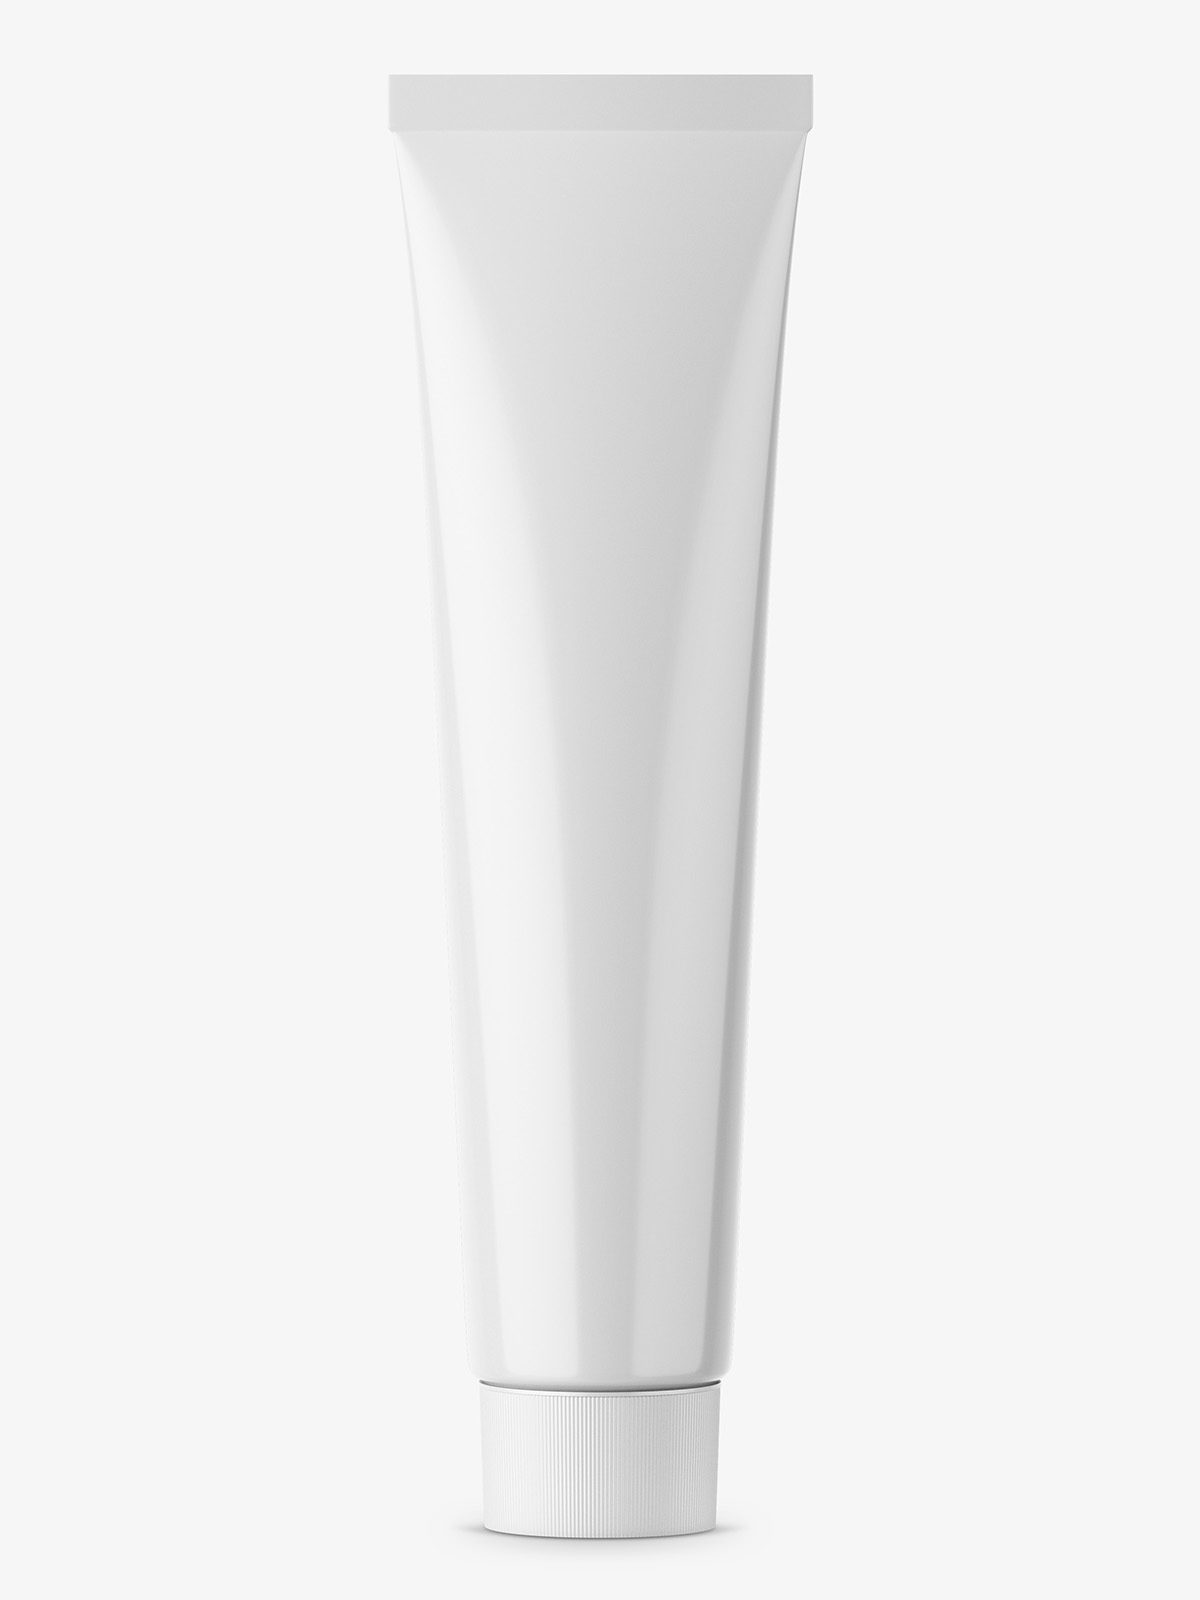 Download Toothpaste tube mockup - Smarty Mockups